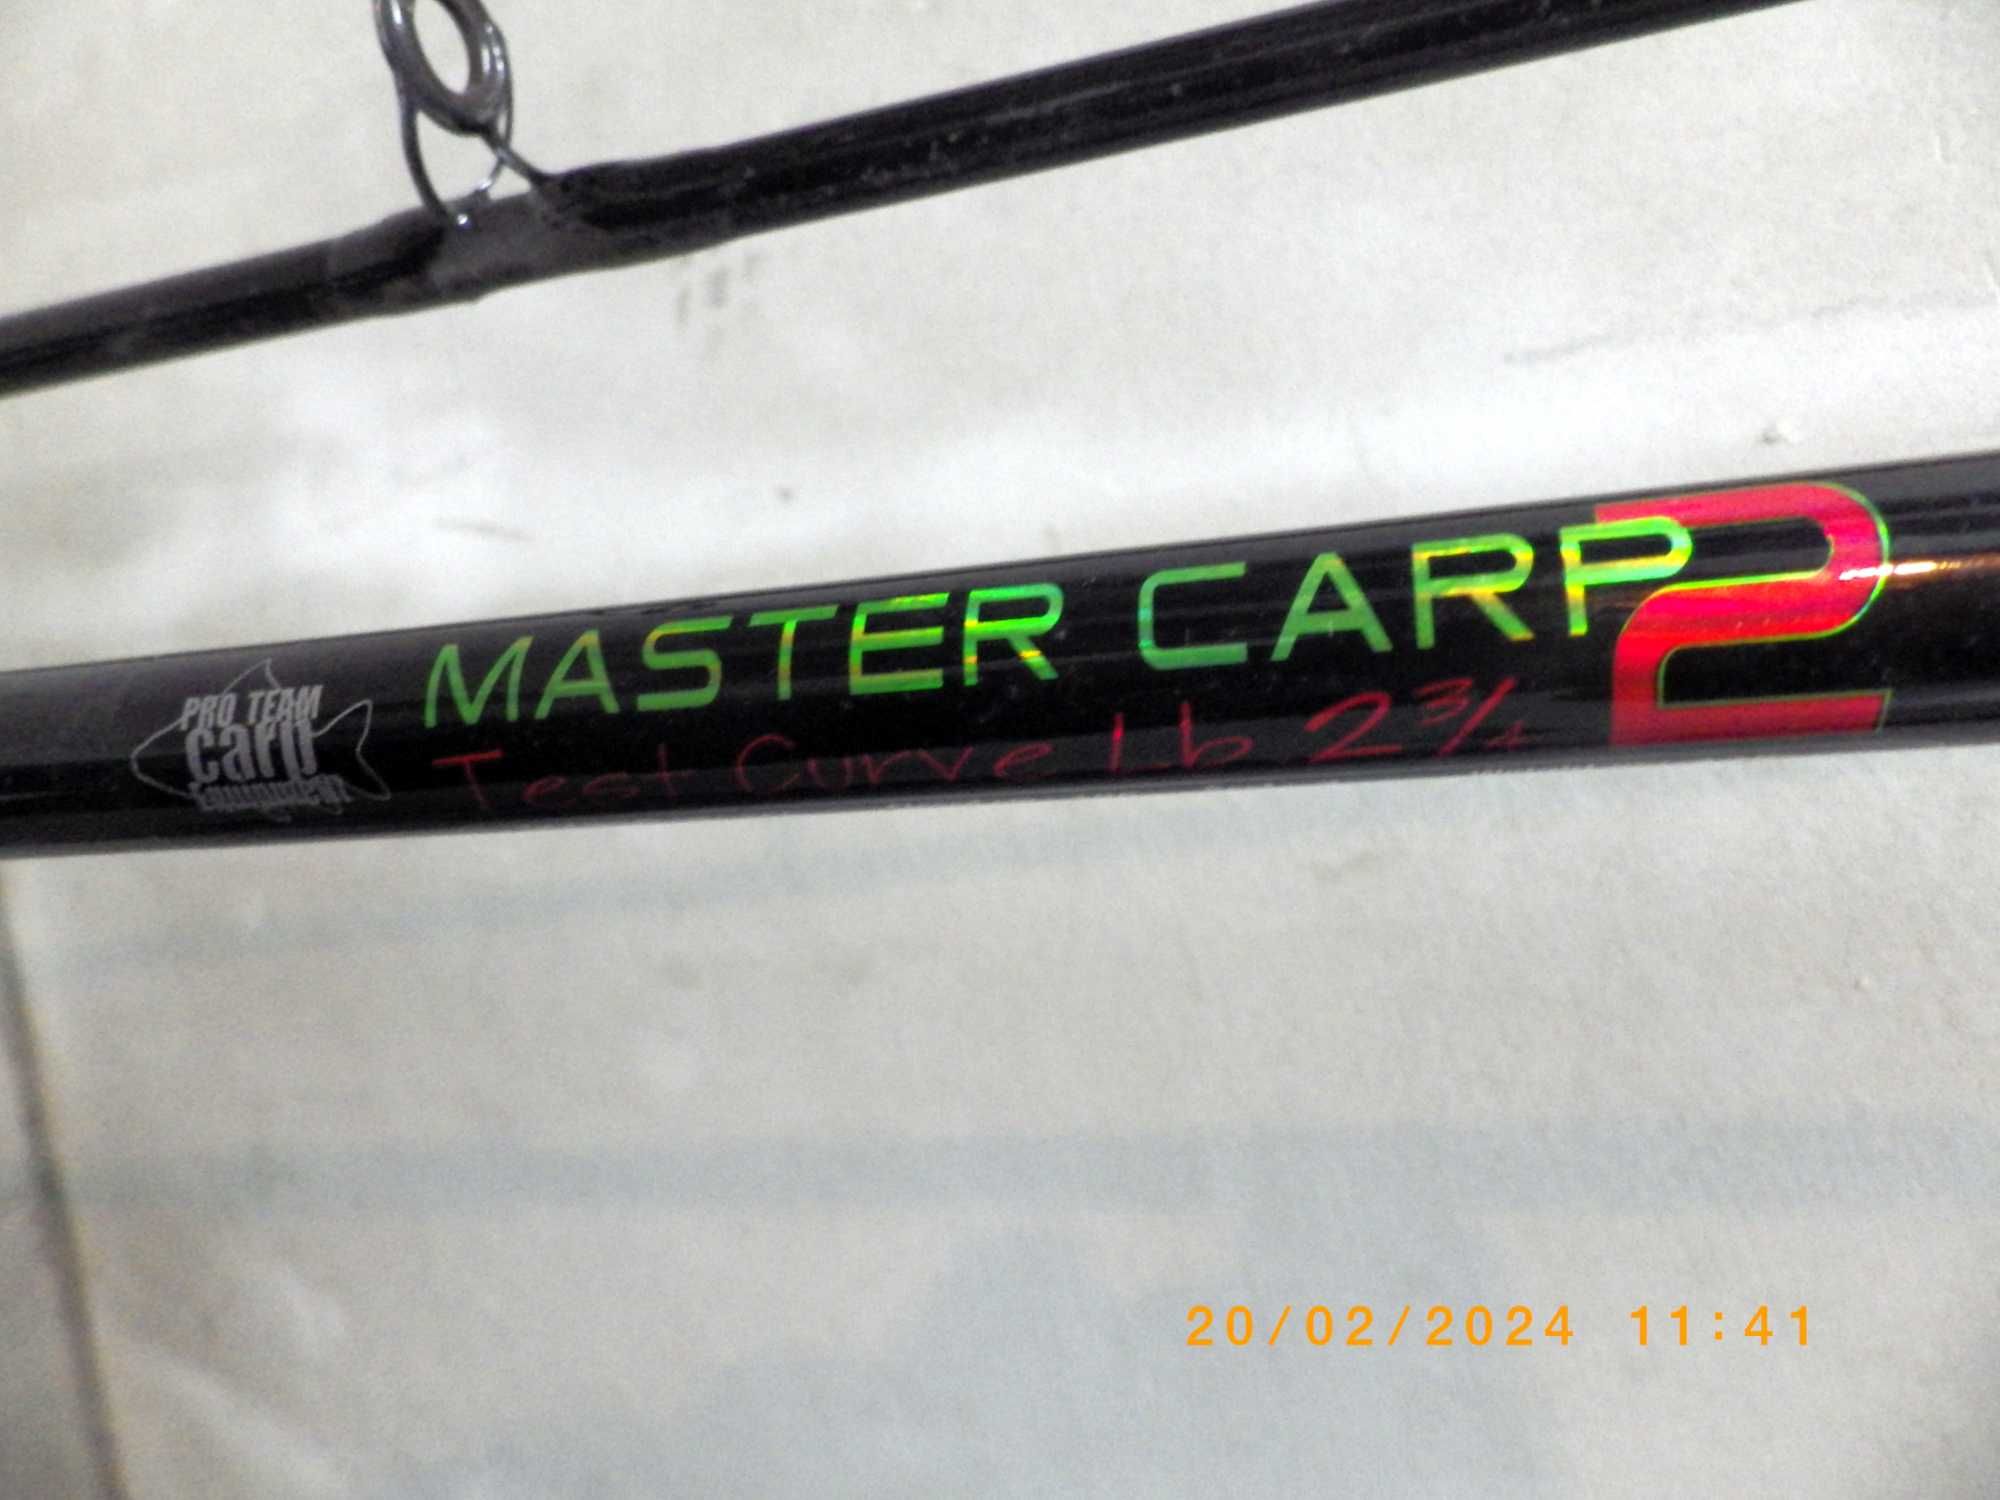 Wędka na karpia Master Carp 2, dł. 3,6m